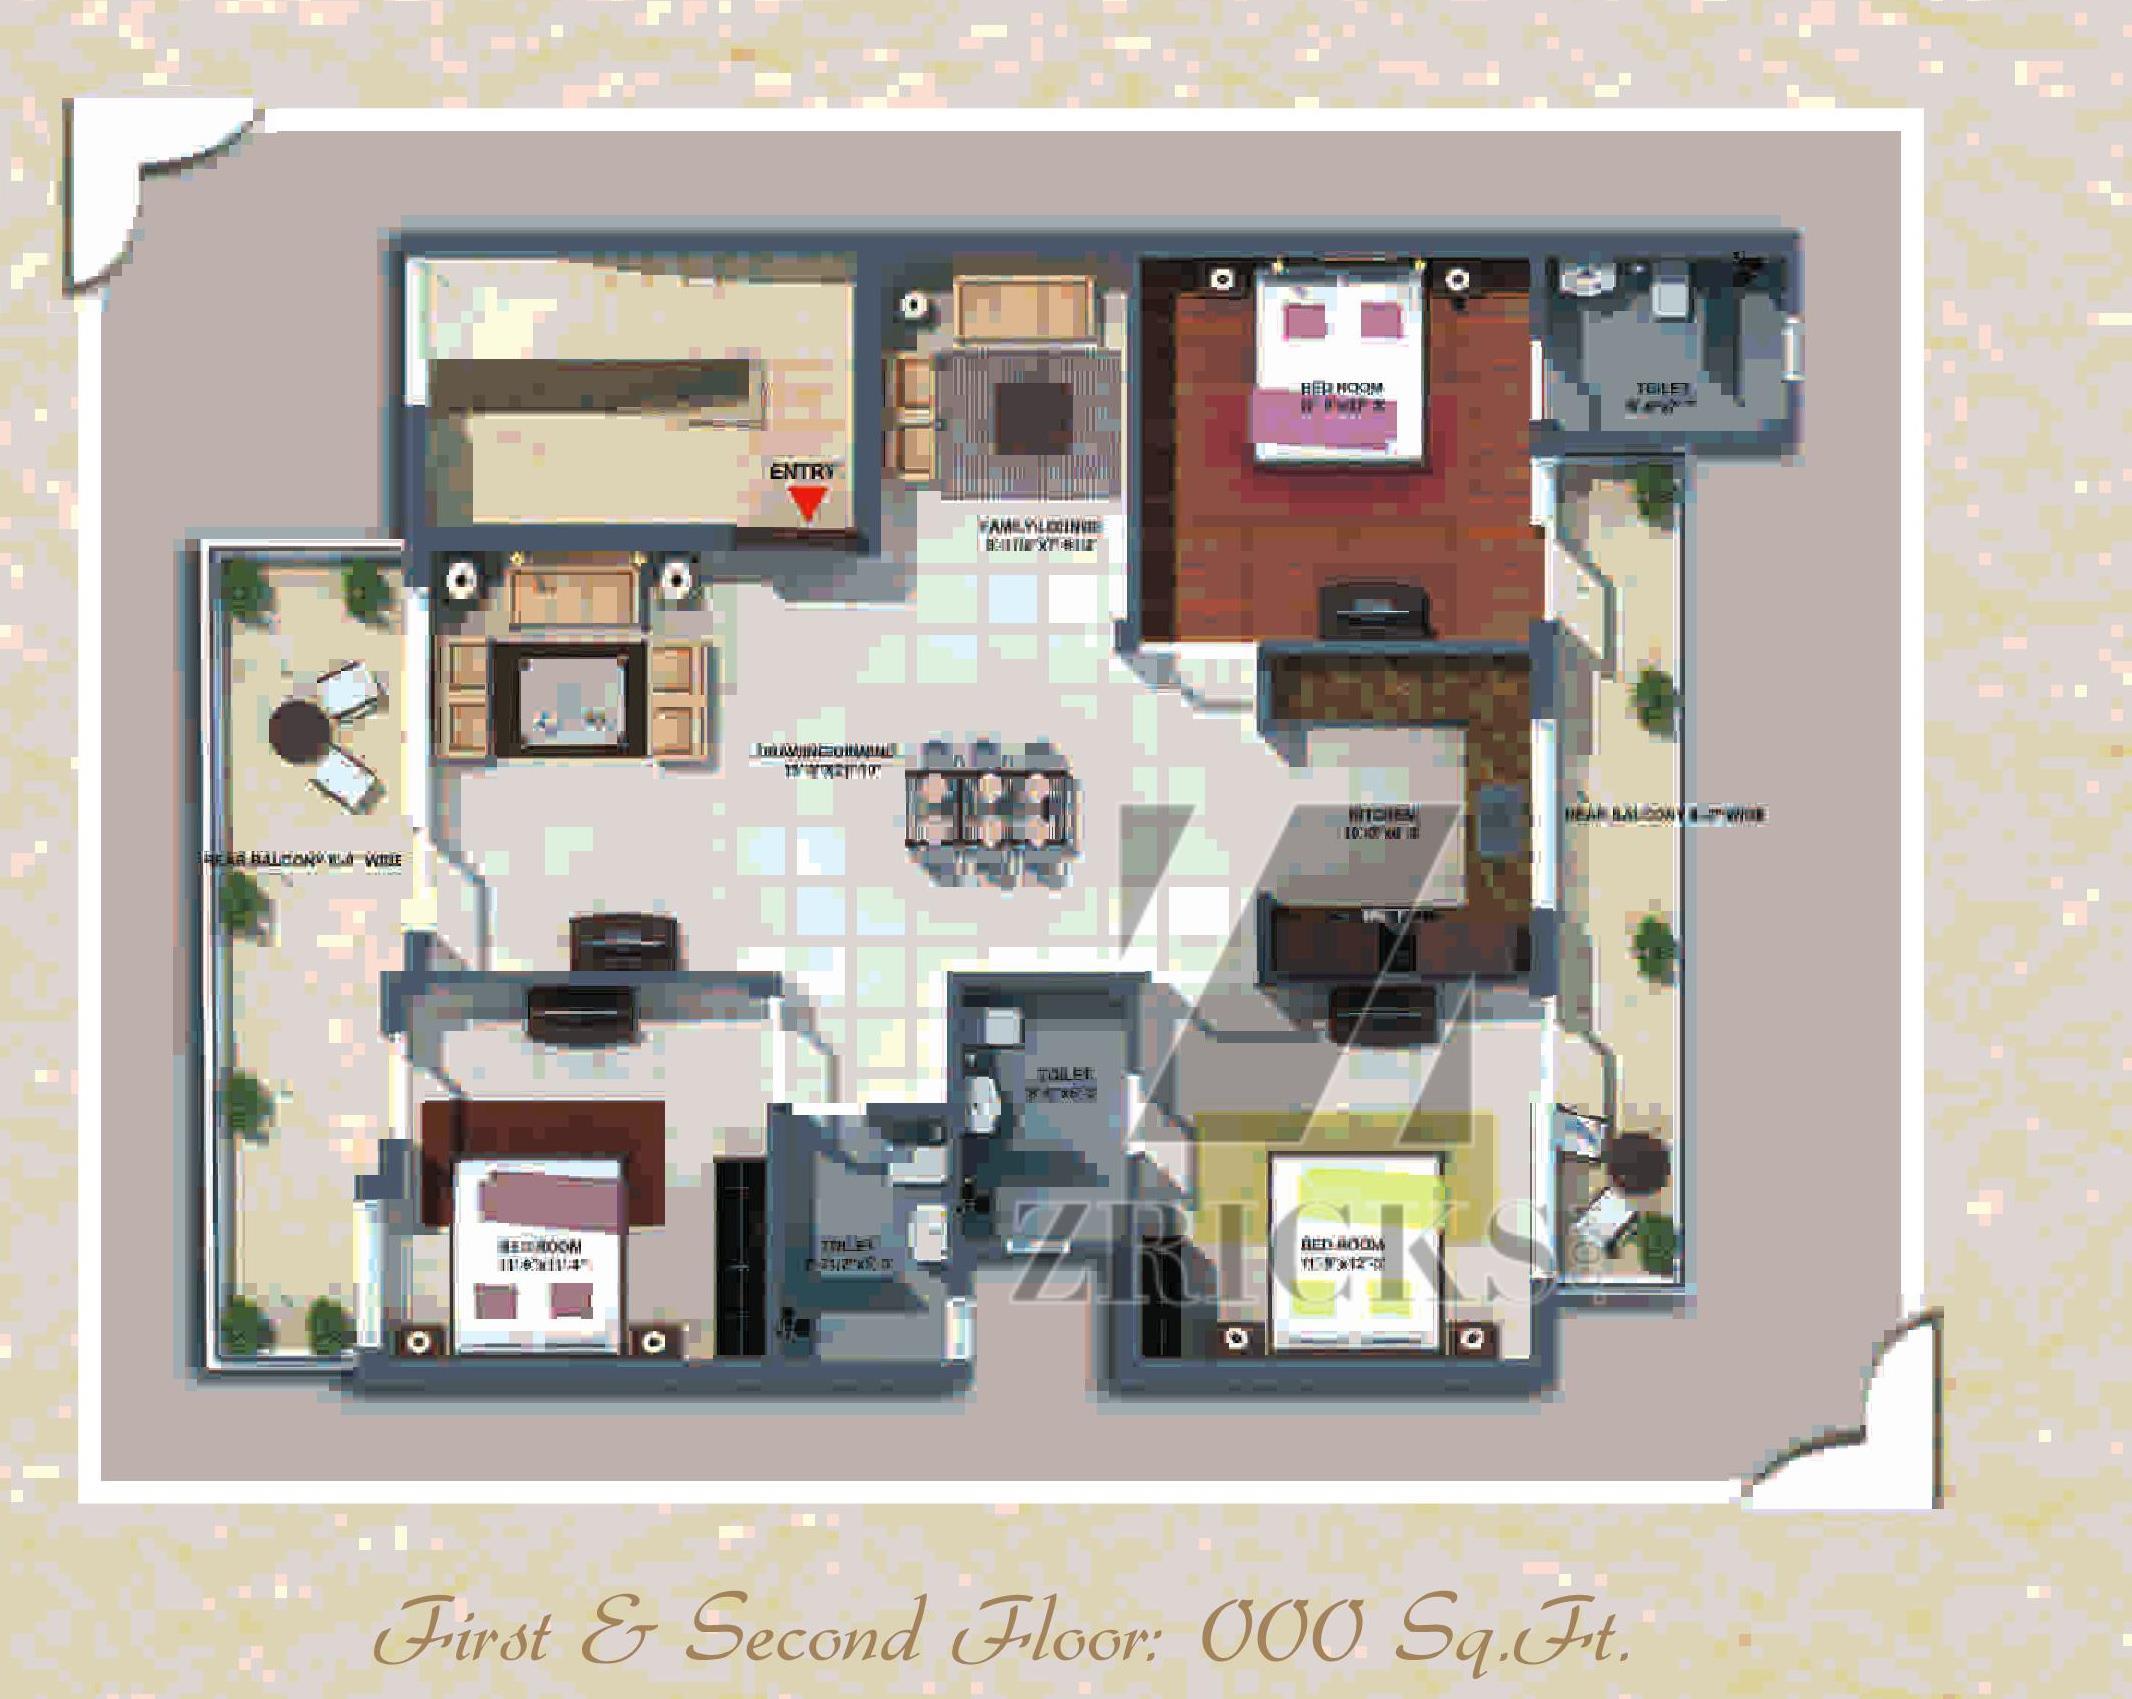 Omaxe City Homes Floor Plan